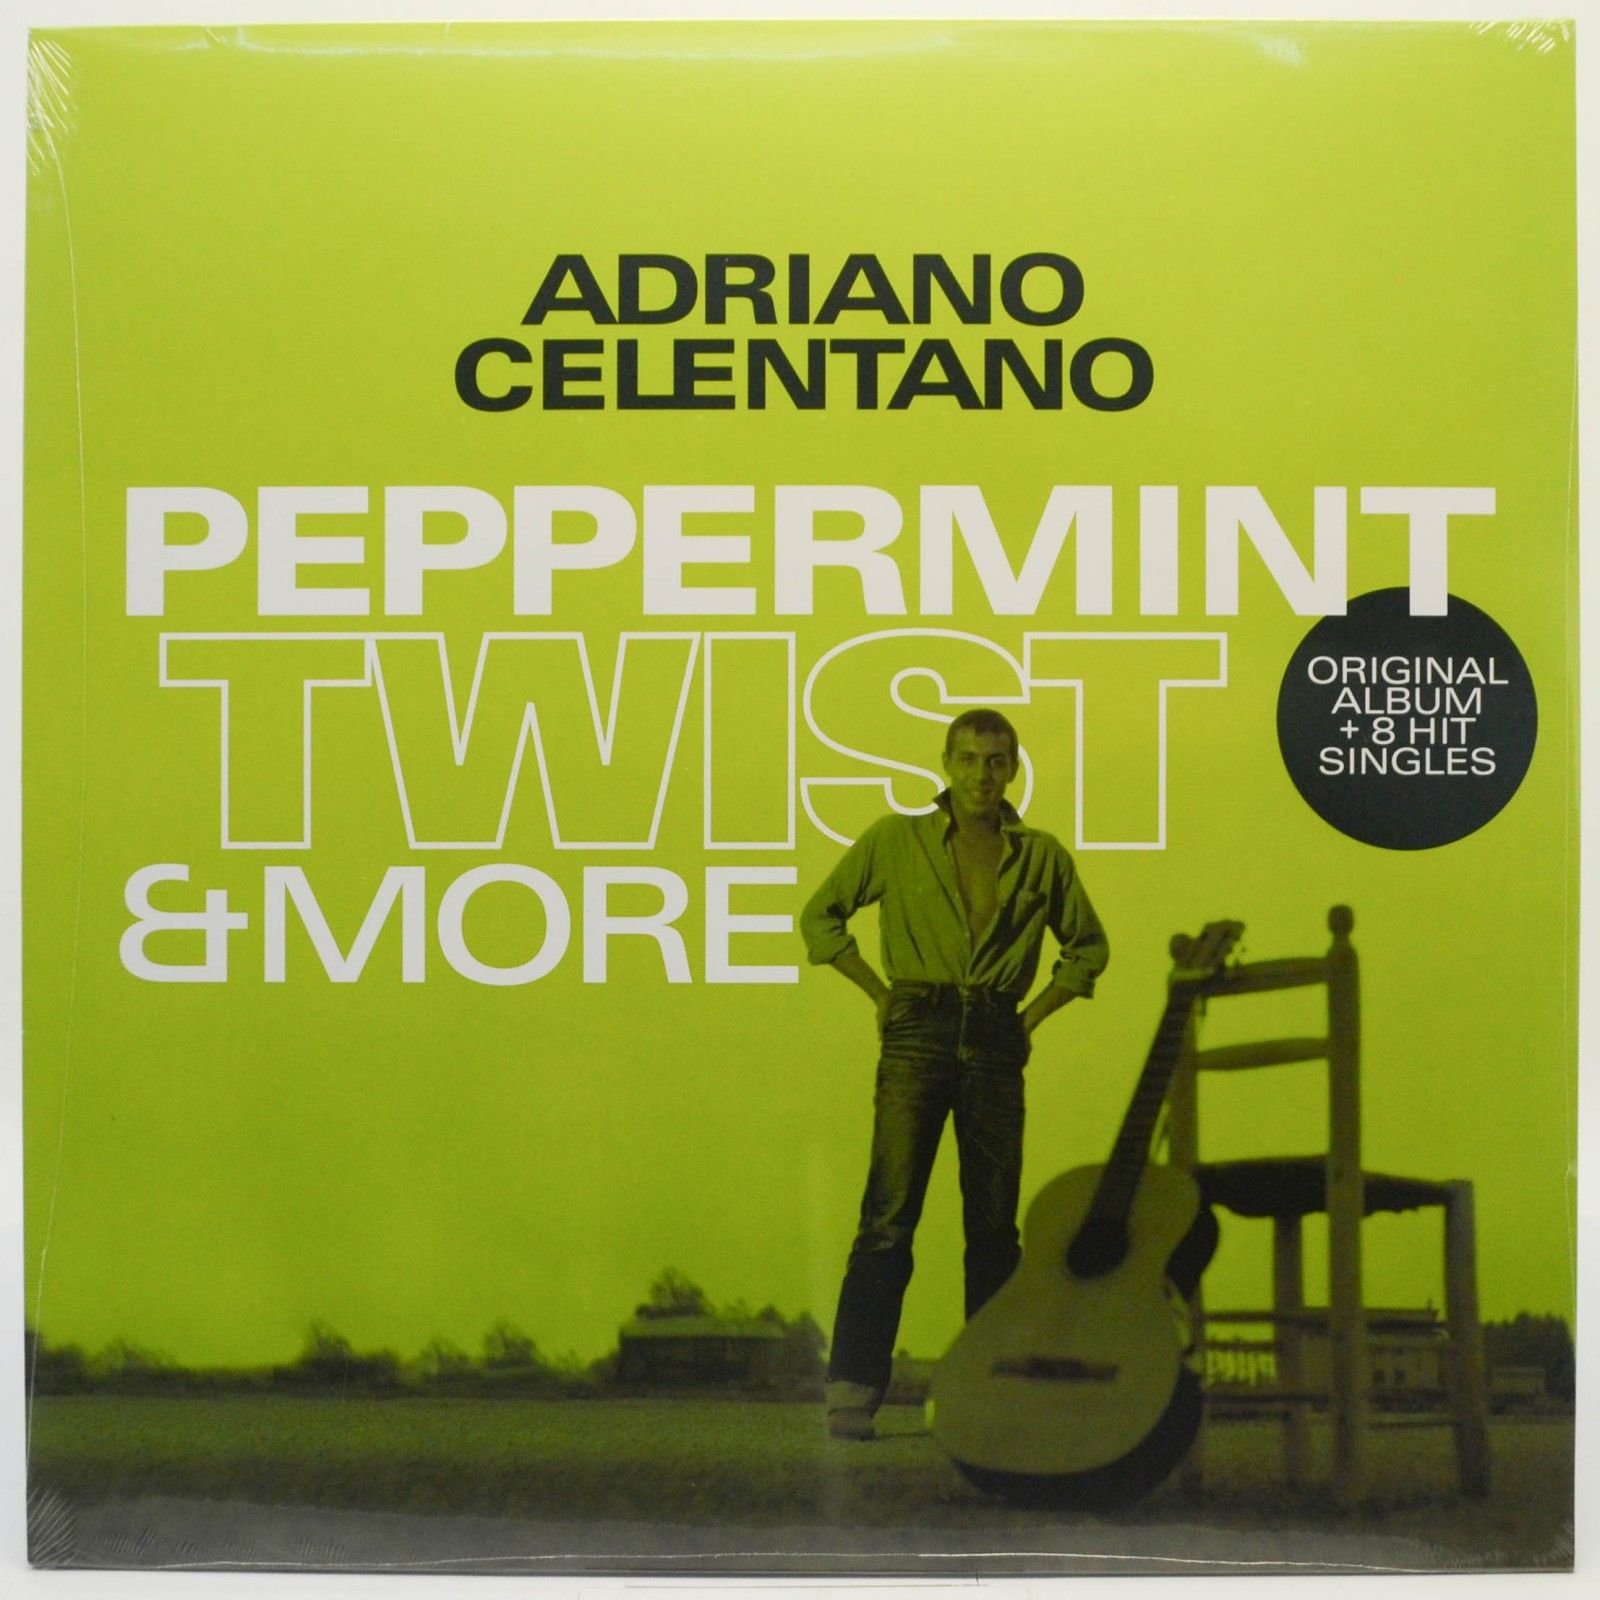 Adriano Celentano — Peppermint Twist & More (Italy), 1962